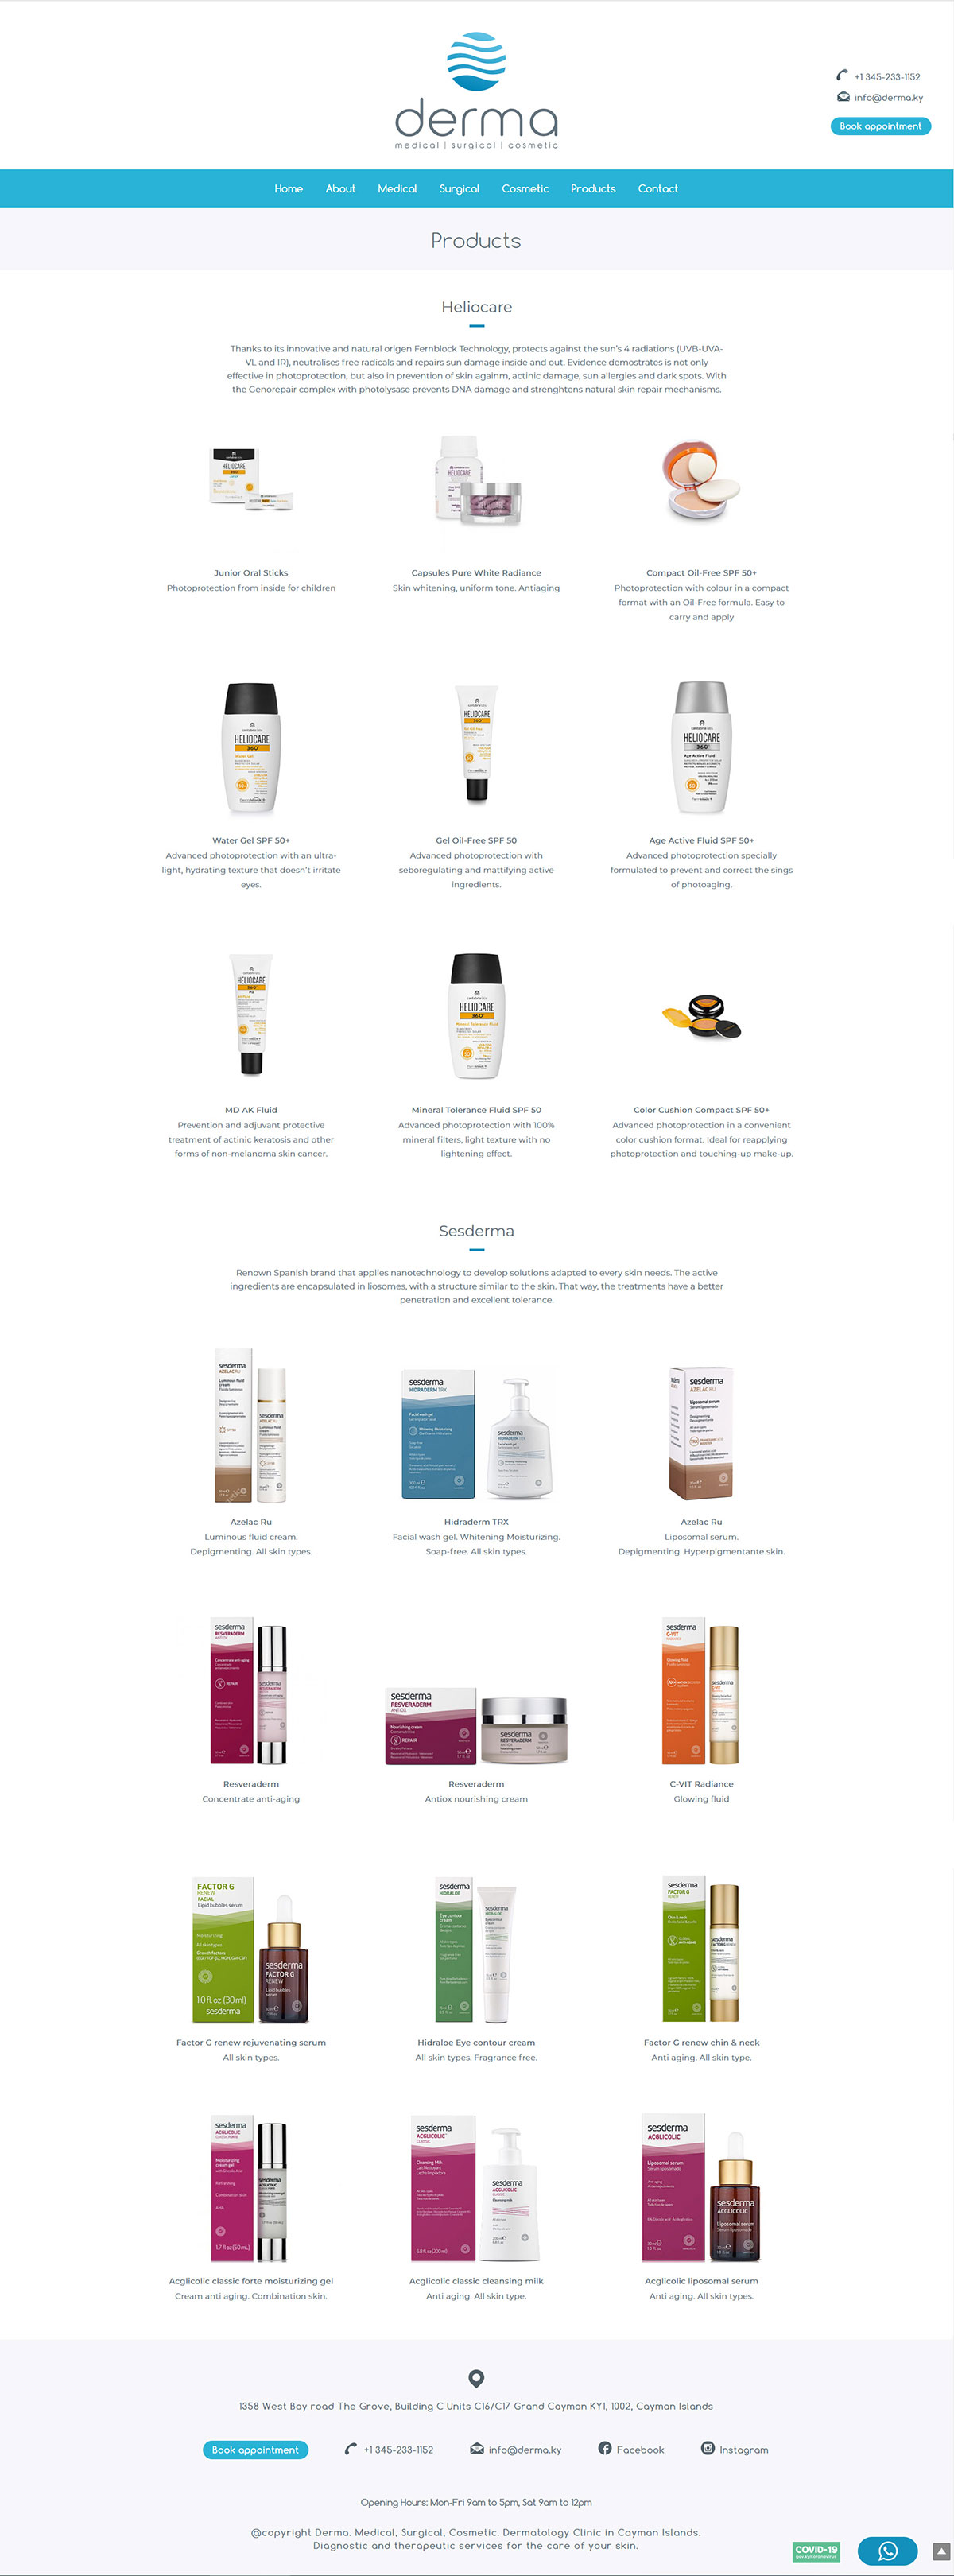 Products Derma dermatology web design and development lavueltaweb